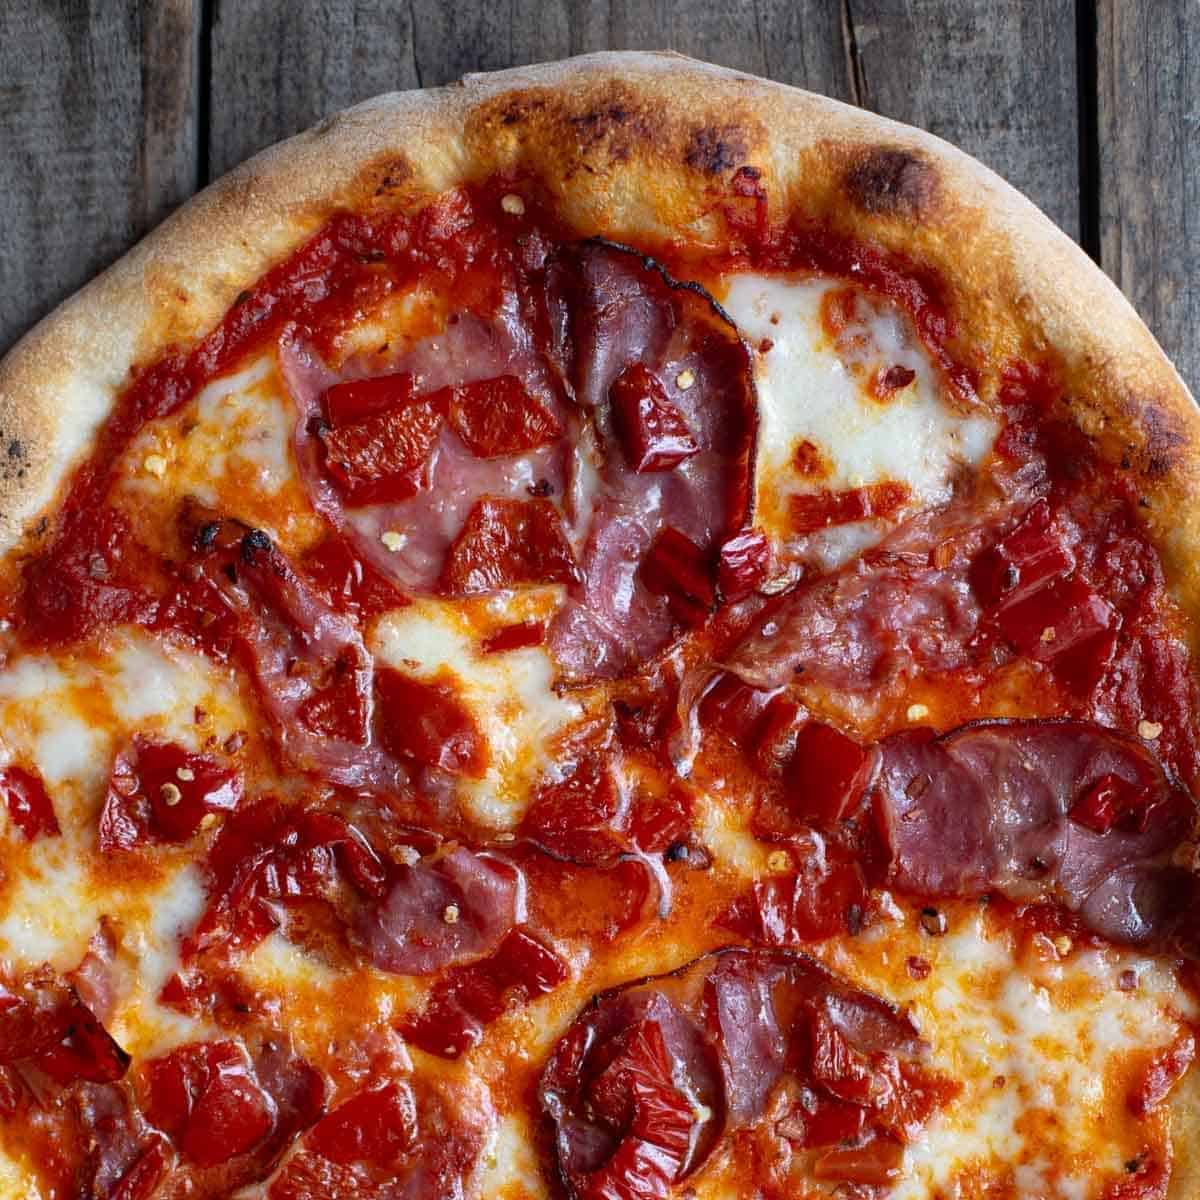 https://www.vindulge.com/wp-content/uploads/2022/05/Spicy-Neapolitan-Pizza-With-Soppressata-and-Coppa-Sq.jpg